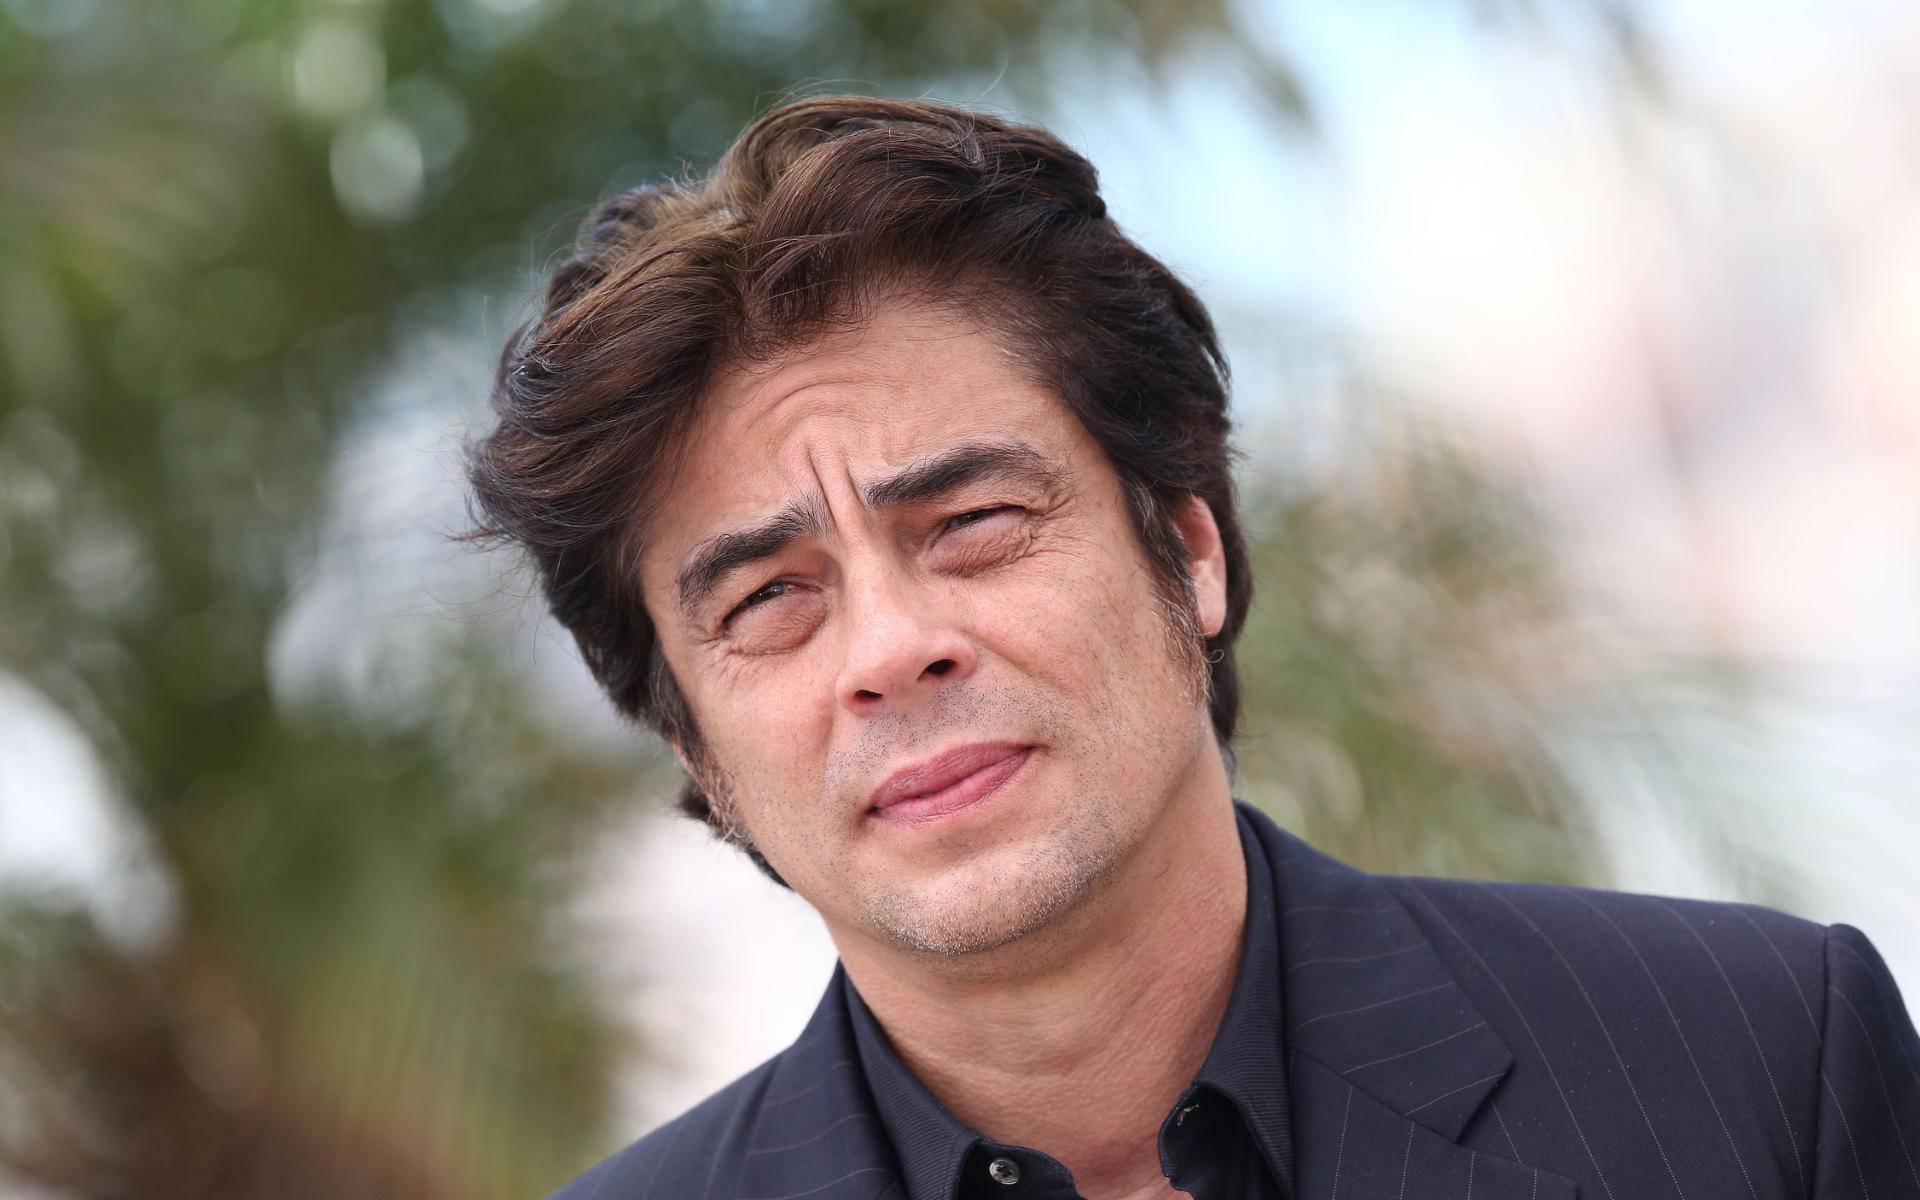 Benicio del toro dating